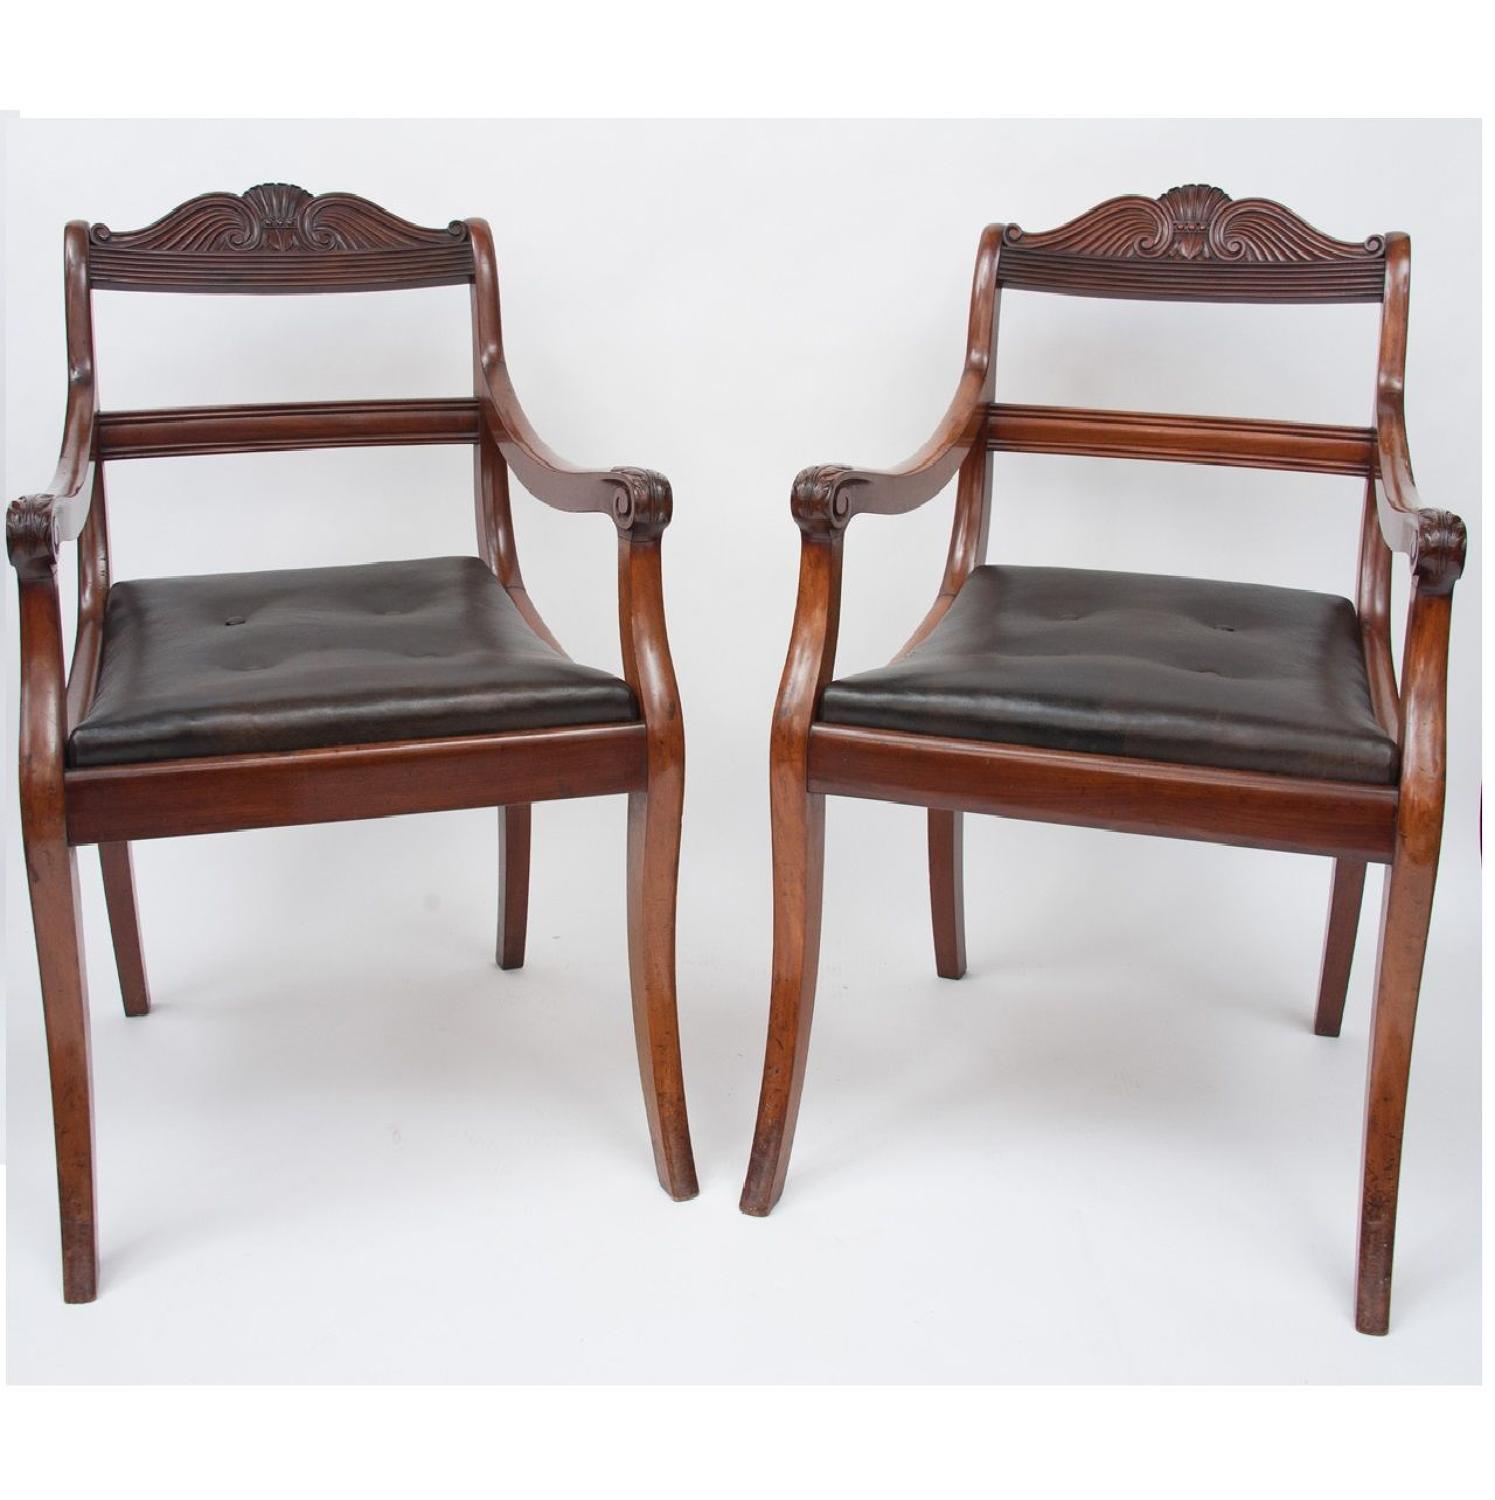 C19th pair of mahogany open armchairs